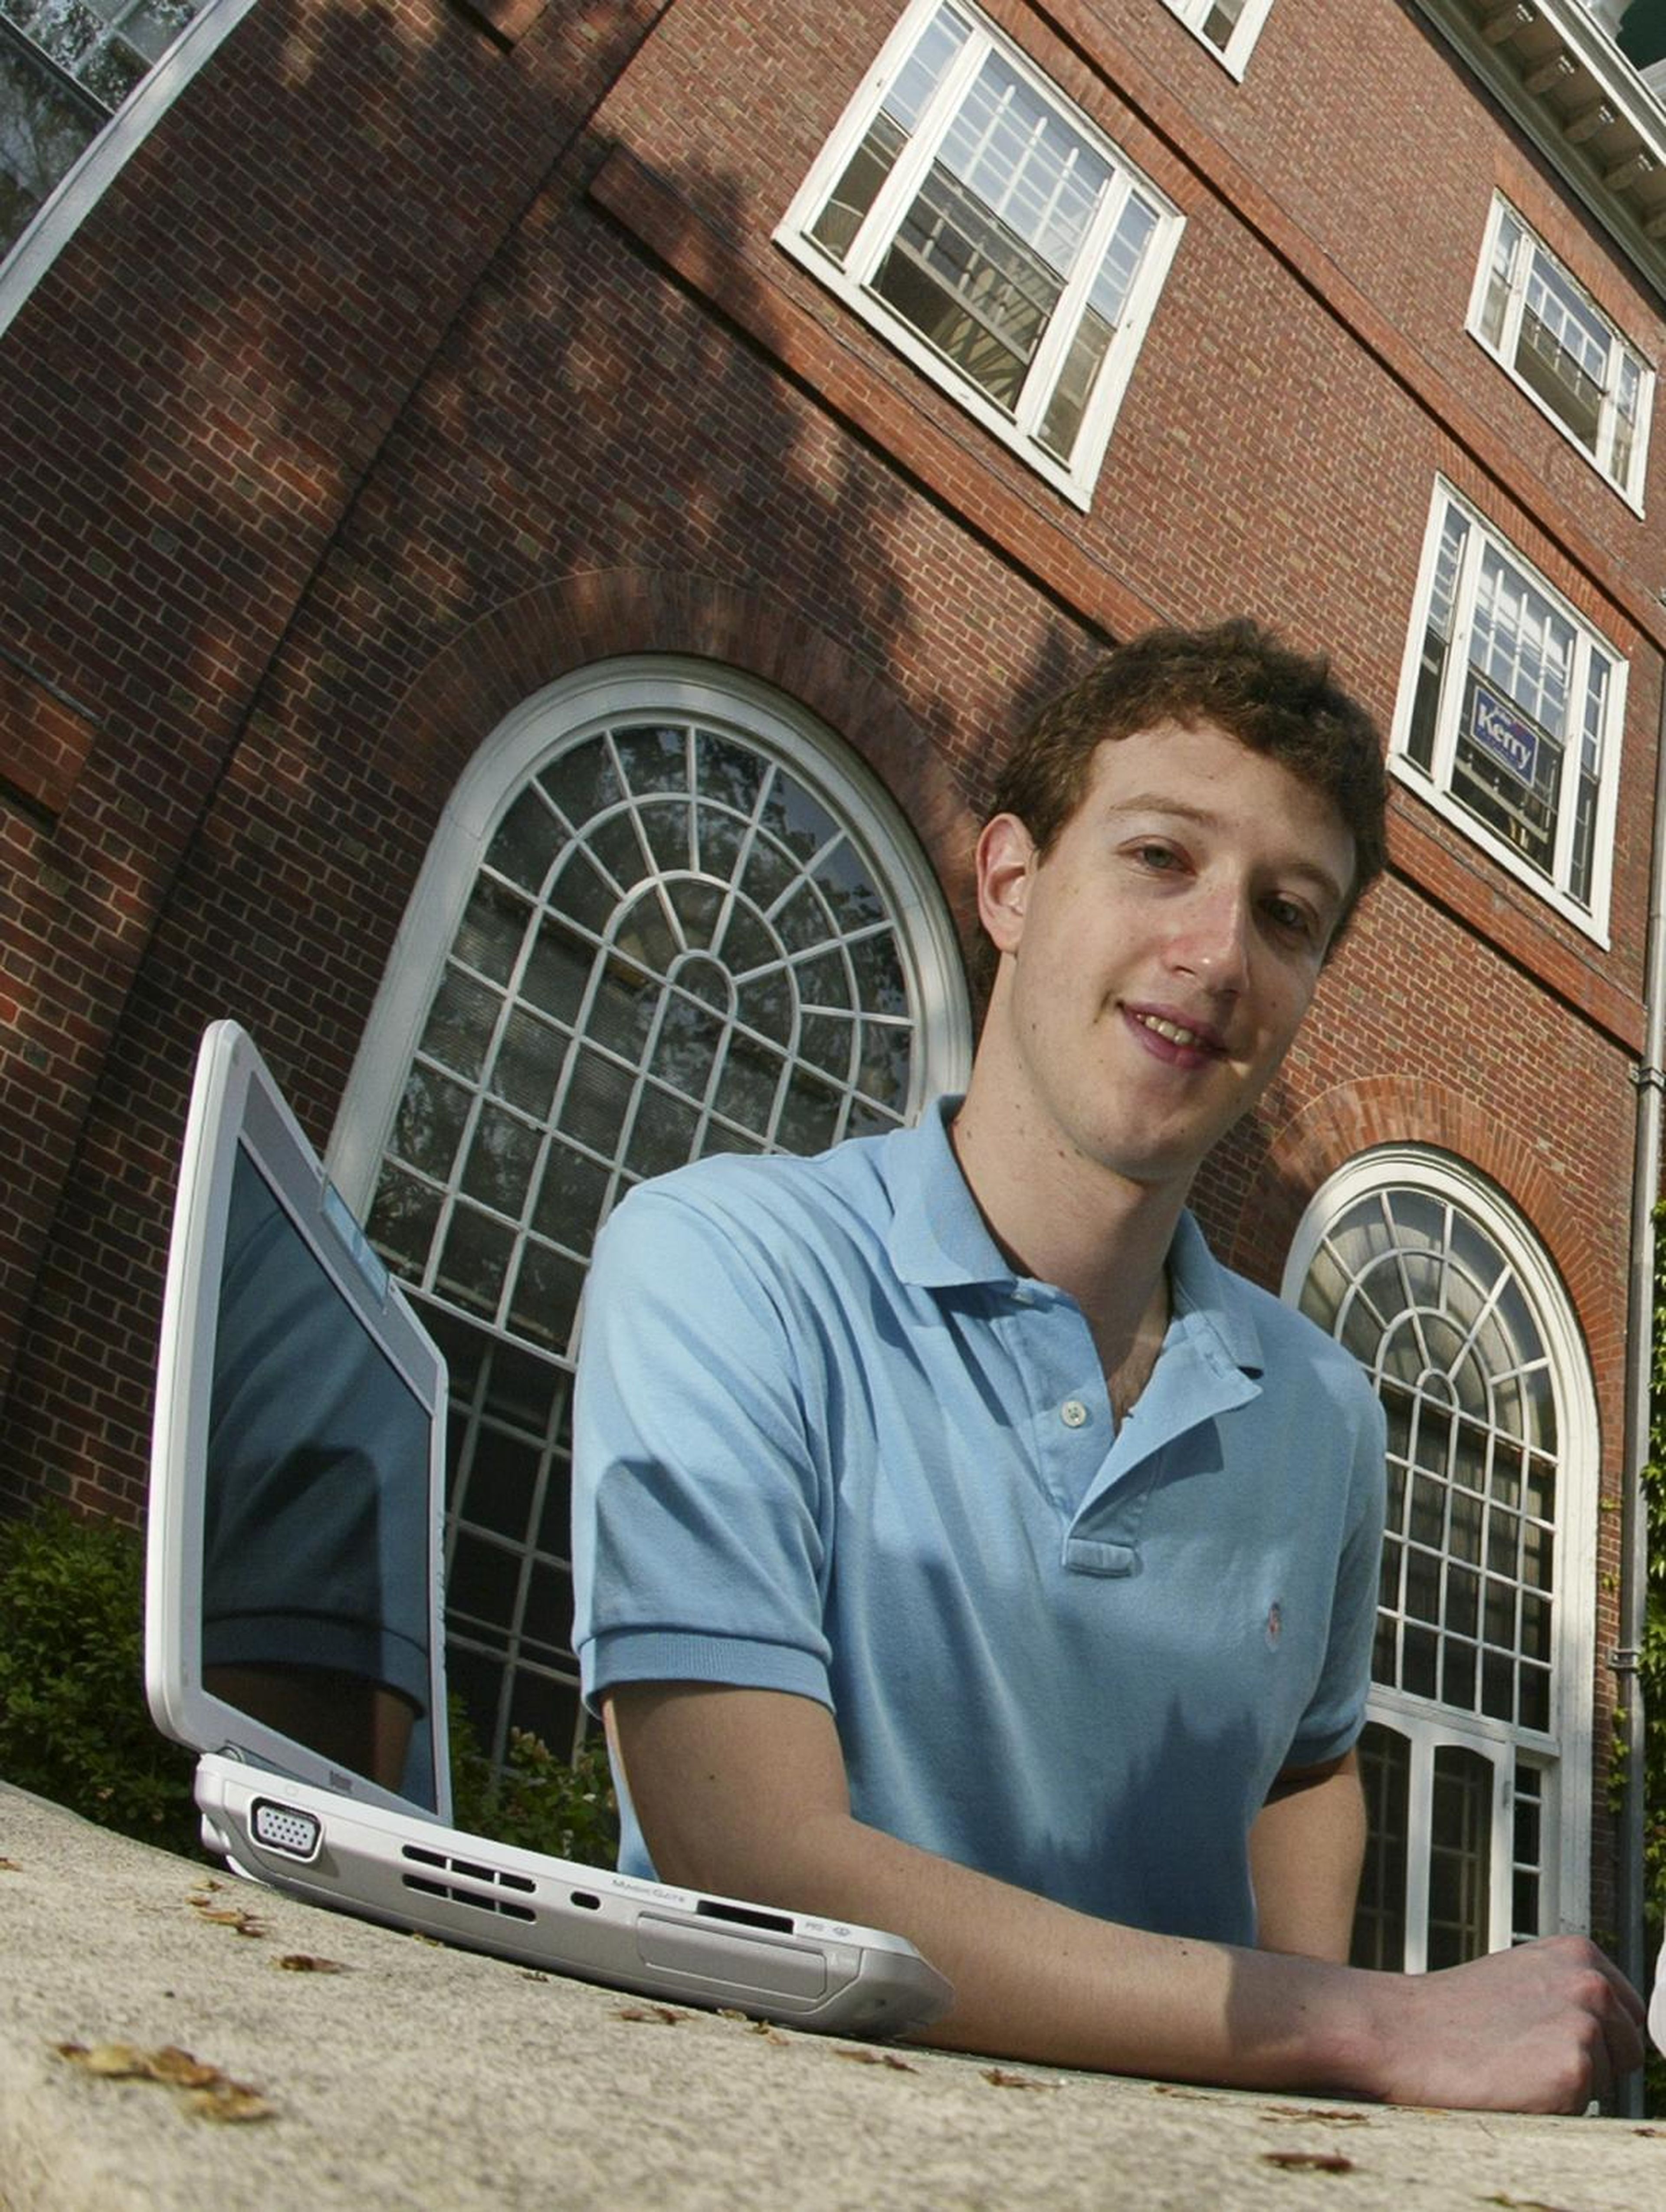 Zuckerberg was a sophomore at Harvard University when he built Facebook with fellow students Eduardo Saverin, Andrew McCollum, Dustin Moskovitz, and Chris Hughes.